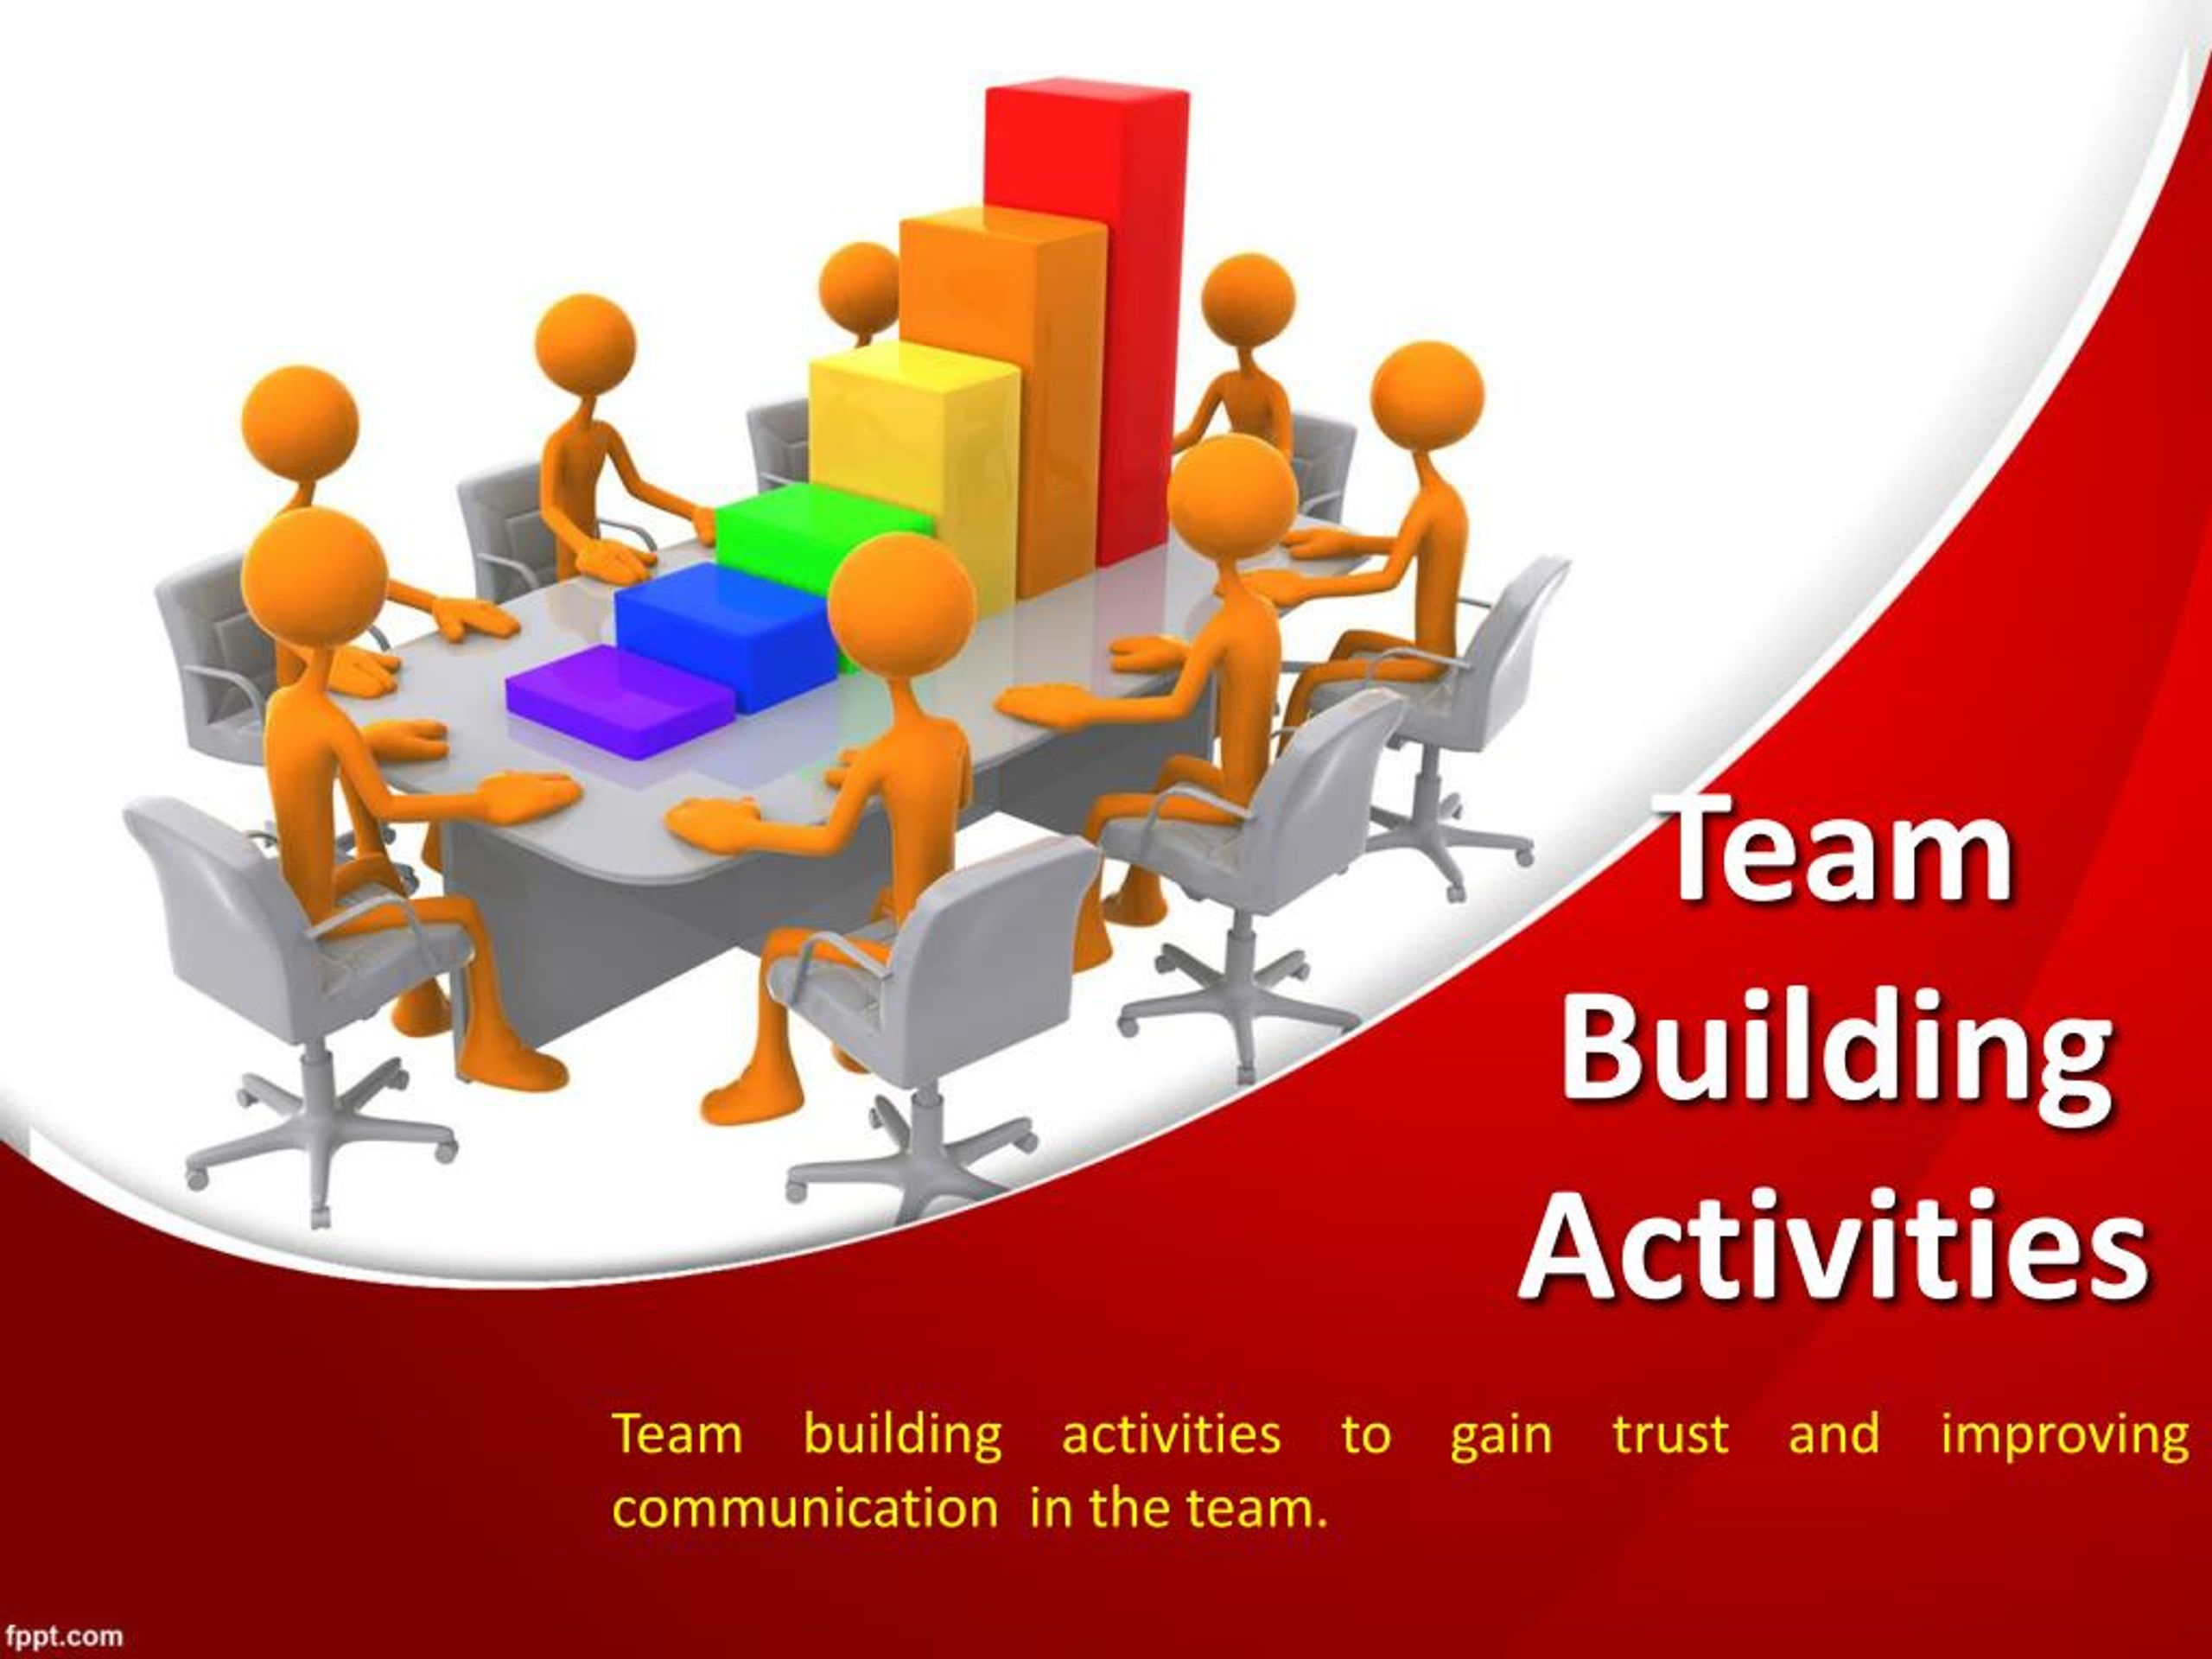 team building activities presentation